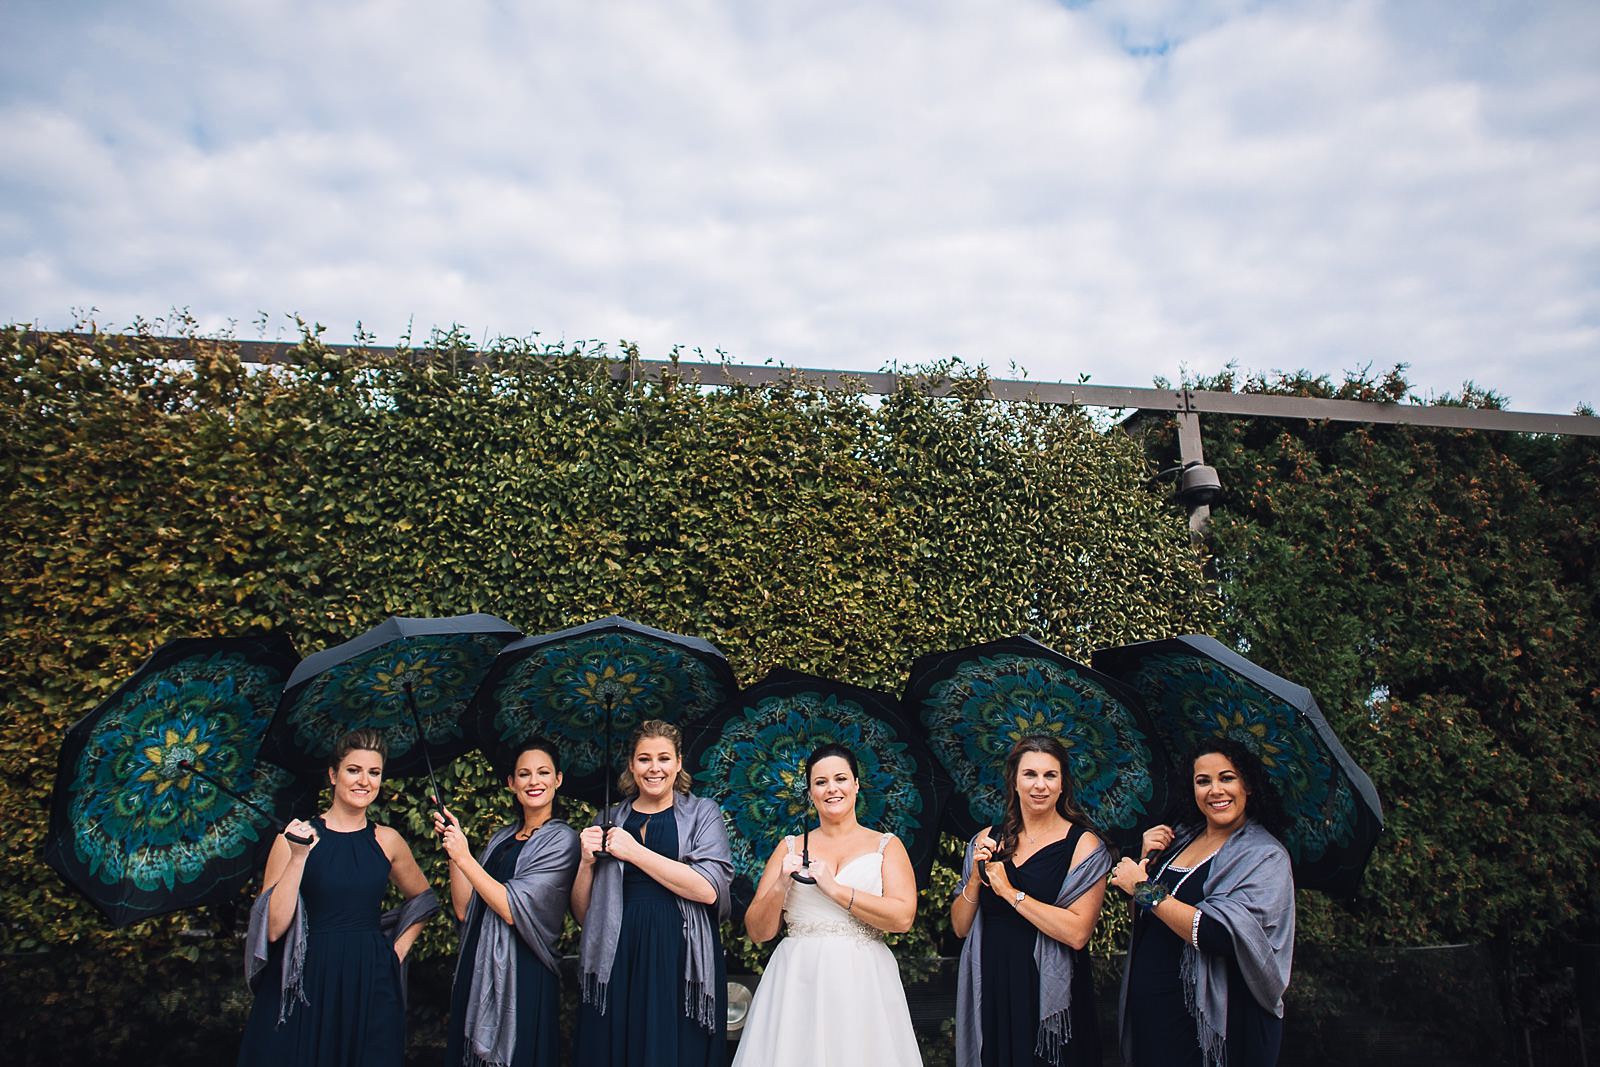 24 bridesmaids and umbrellas inspiration - Salvatores Chicago Wedding Photos // Jen + Bob